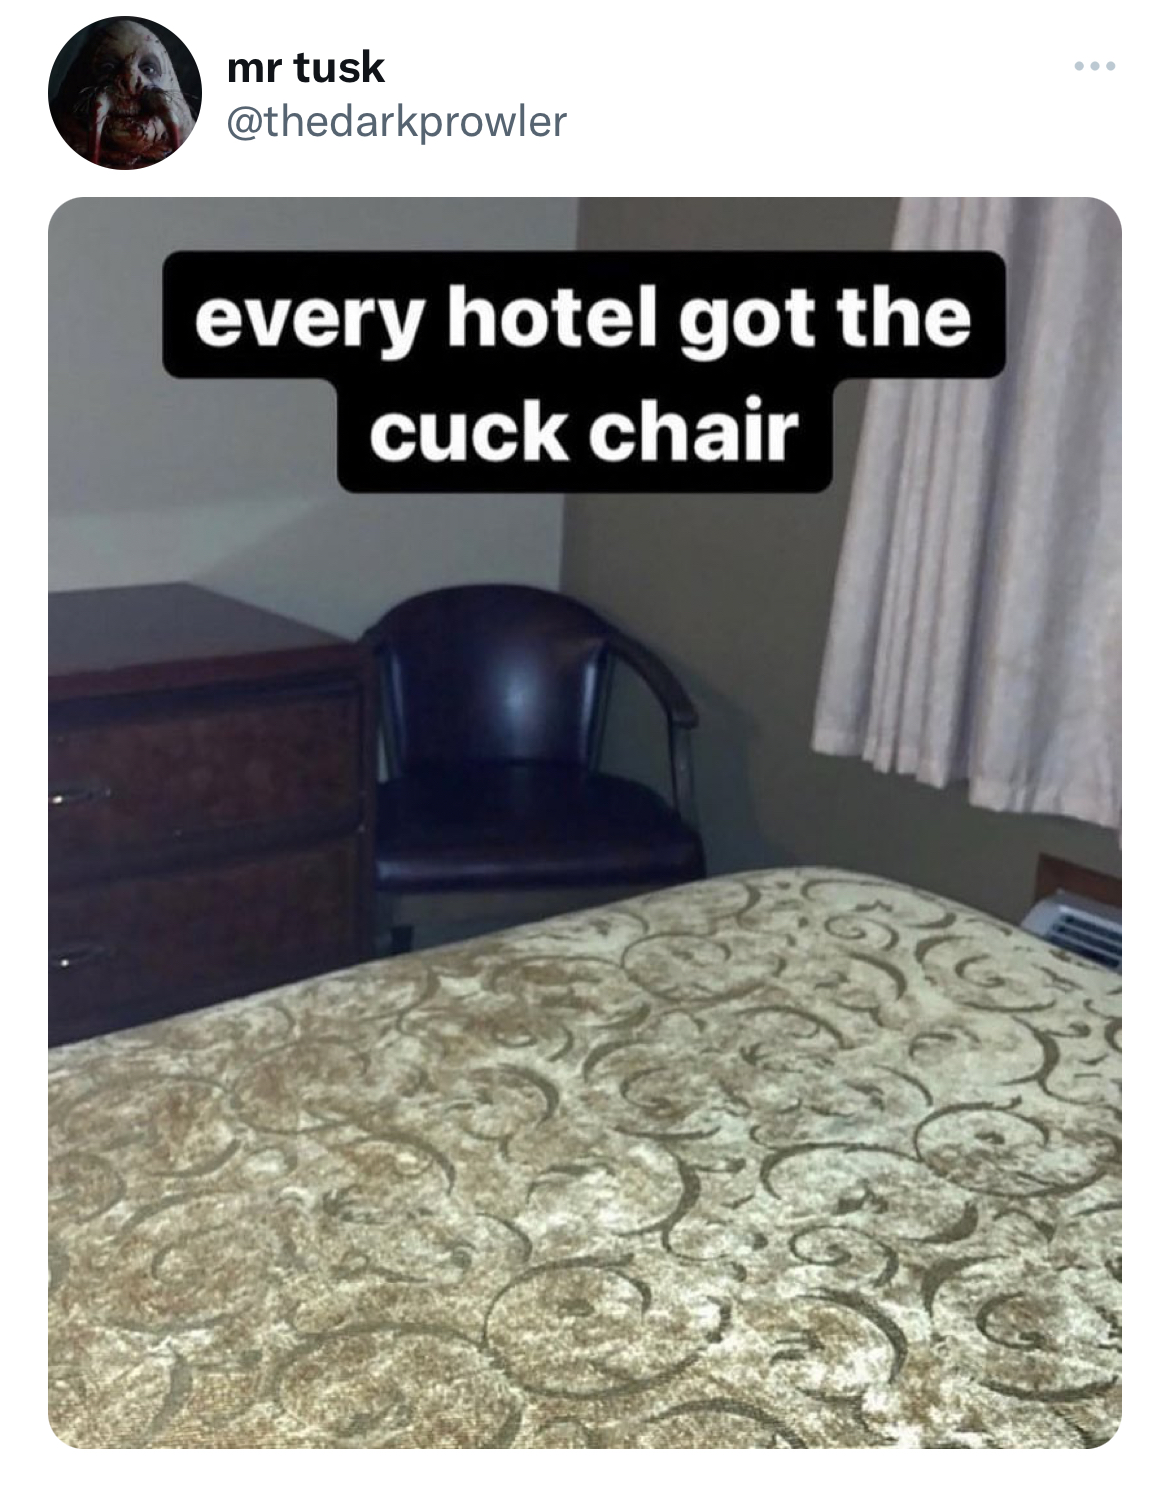 lake umuzi - mr tusk every hotel got the cuck chair